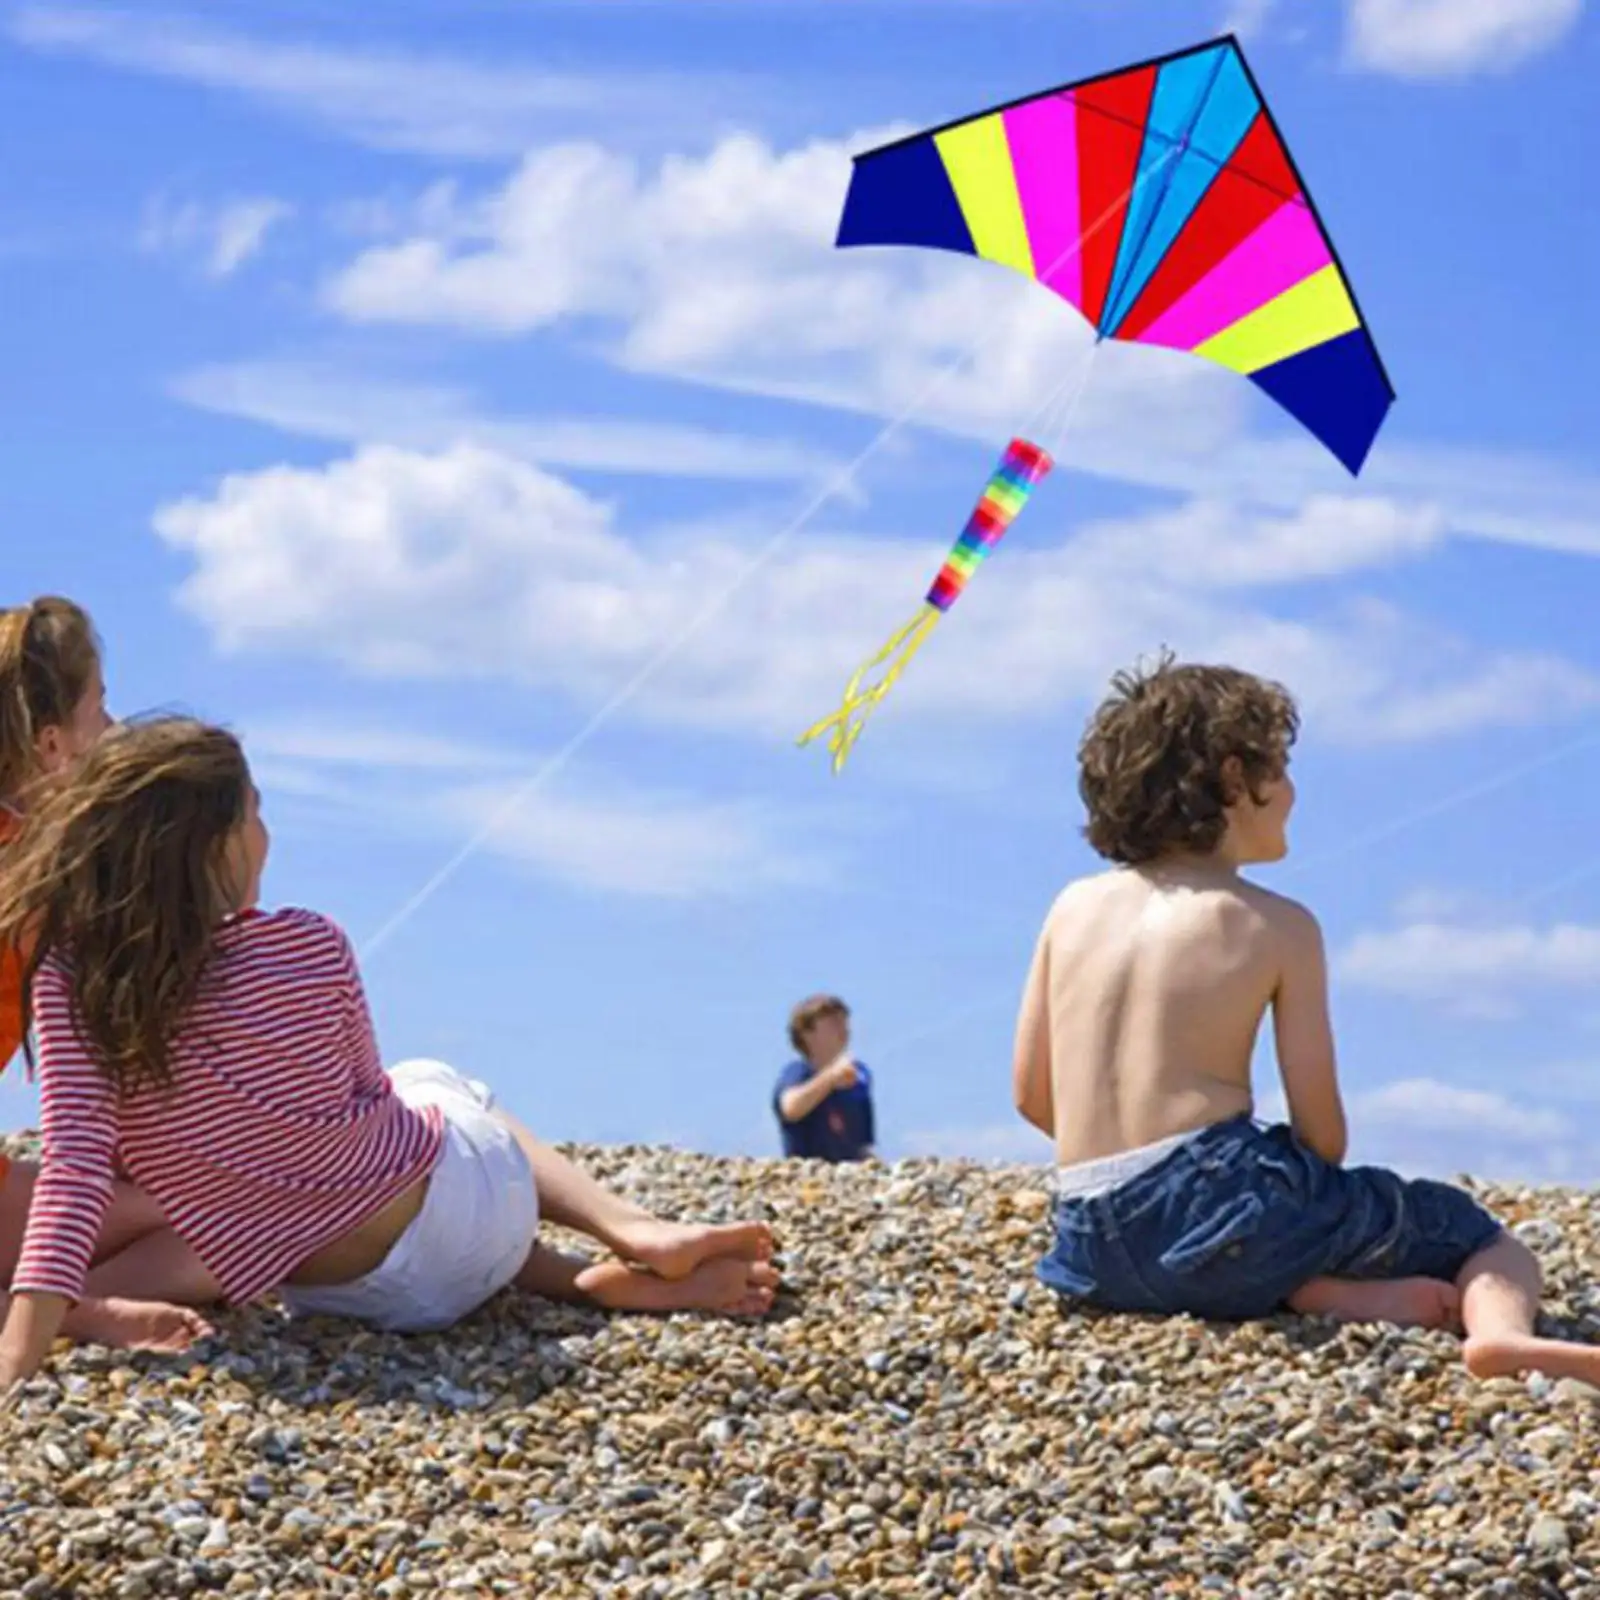 Vivid Delta Kite Windsock Triangle Kite for Sports Garden Teenagers